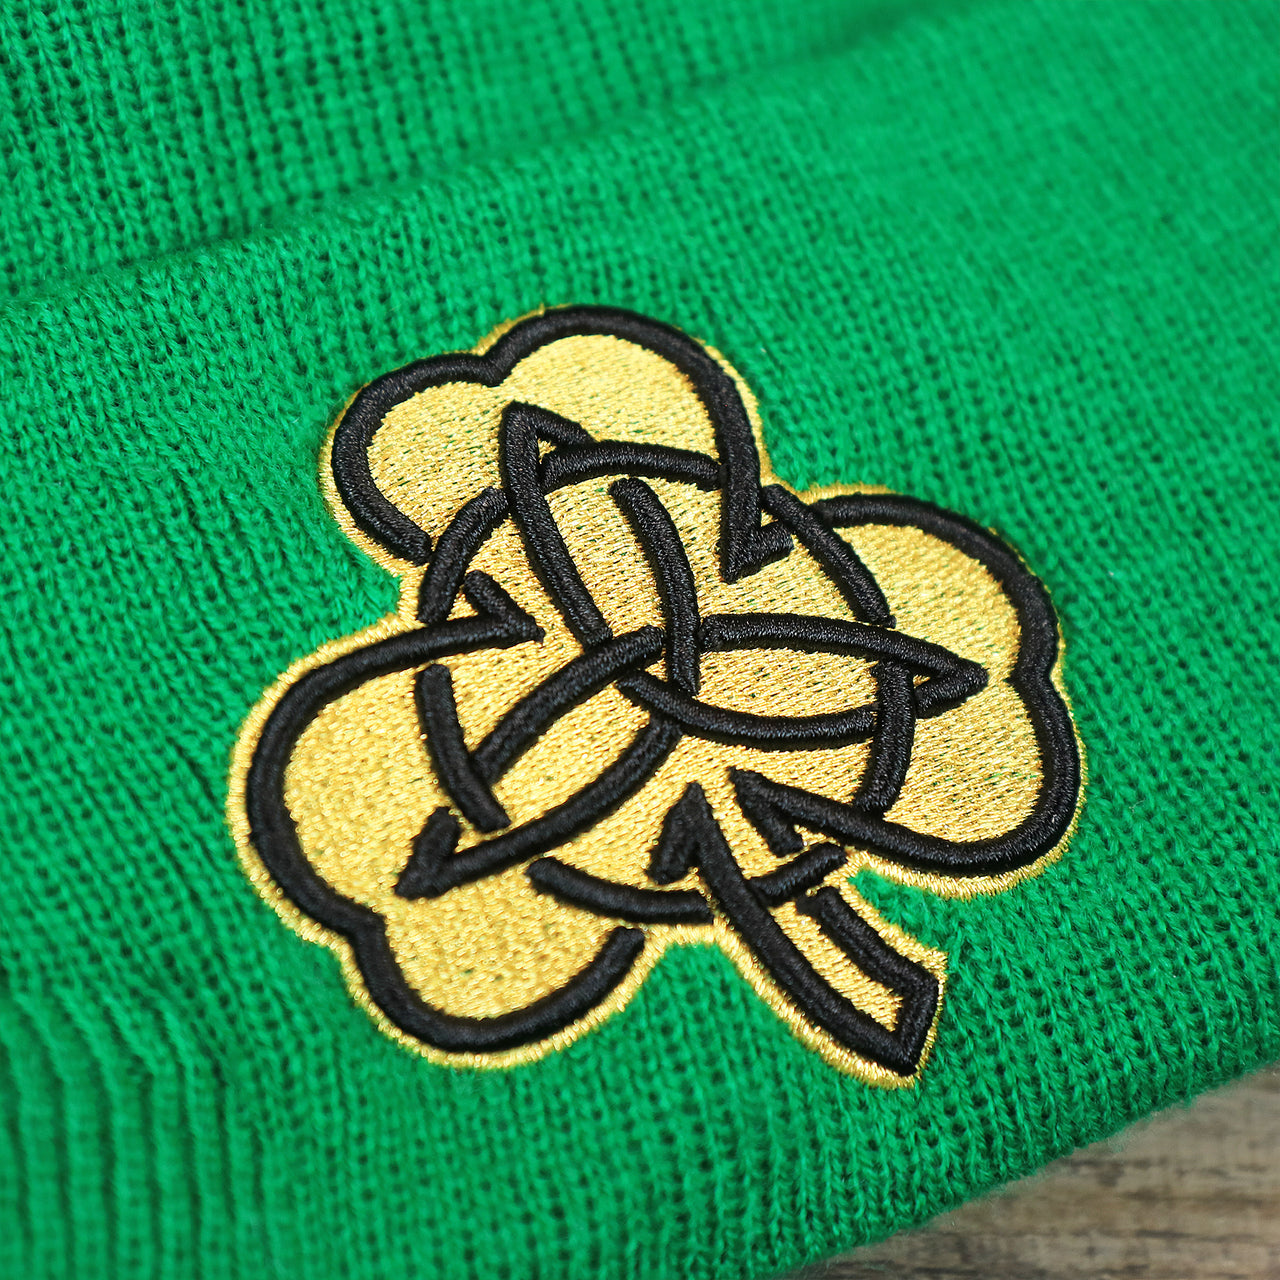 The Clover on the Boston Celtics NBA City Series Metallic Gold Clover Winter Beanie | Green Winter Beanie